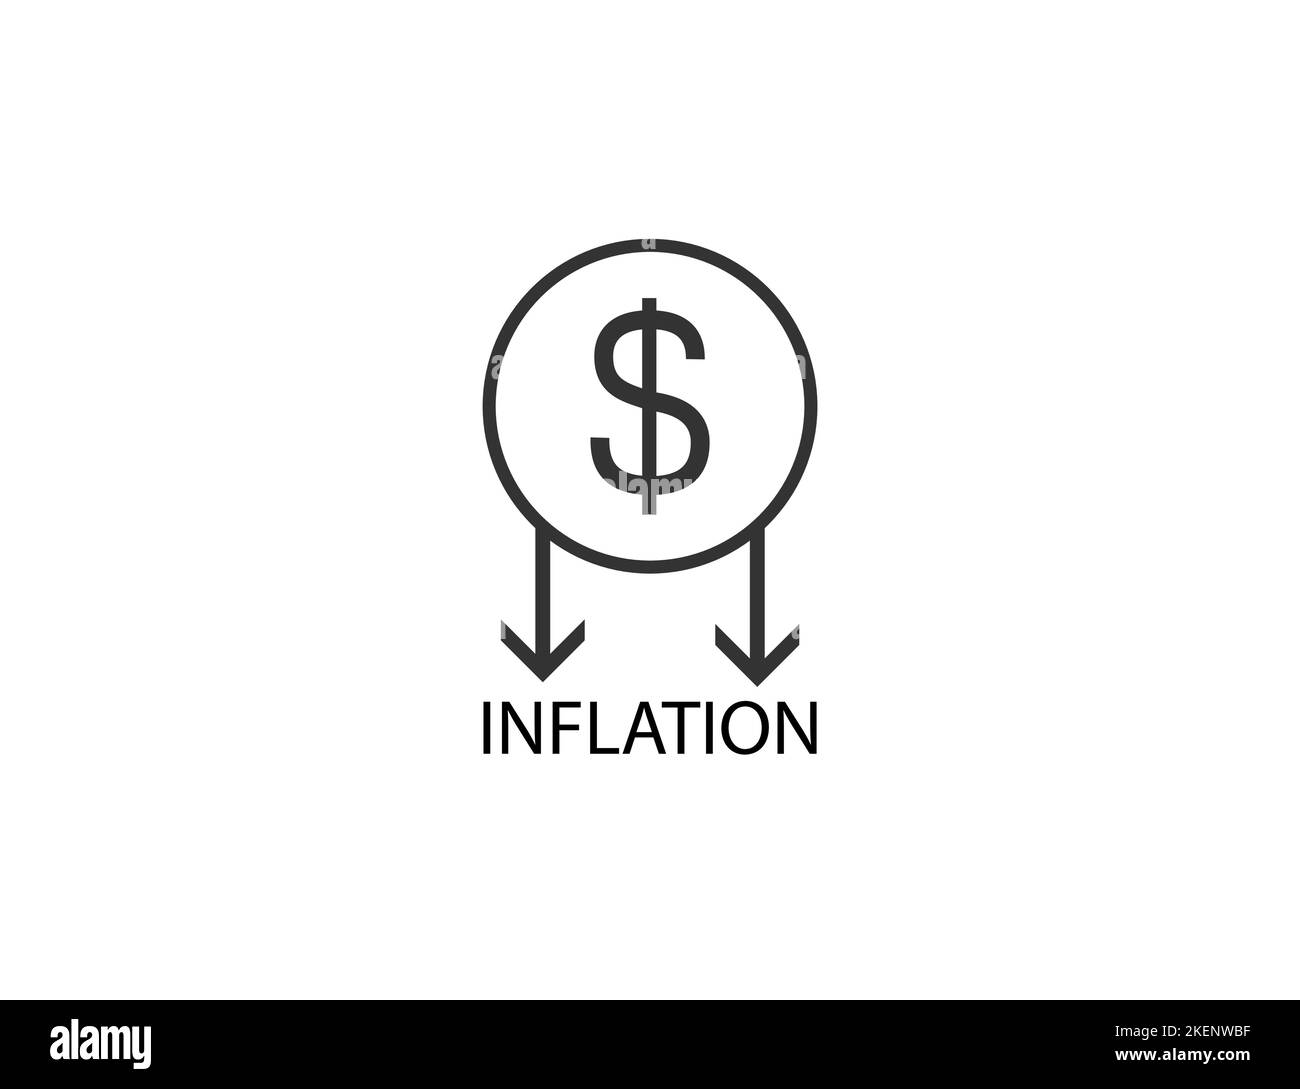 Inflation, money, finance icon. Vector illustration. Stock Vector